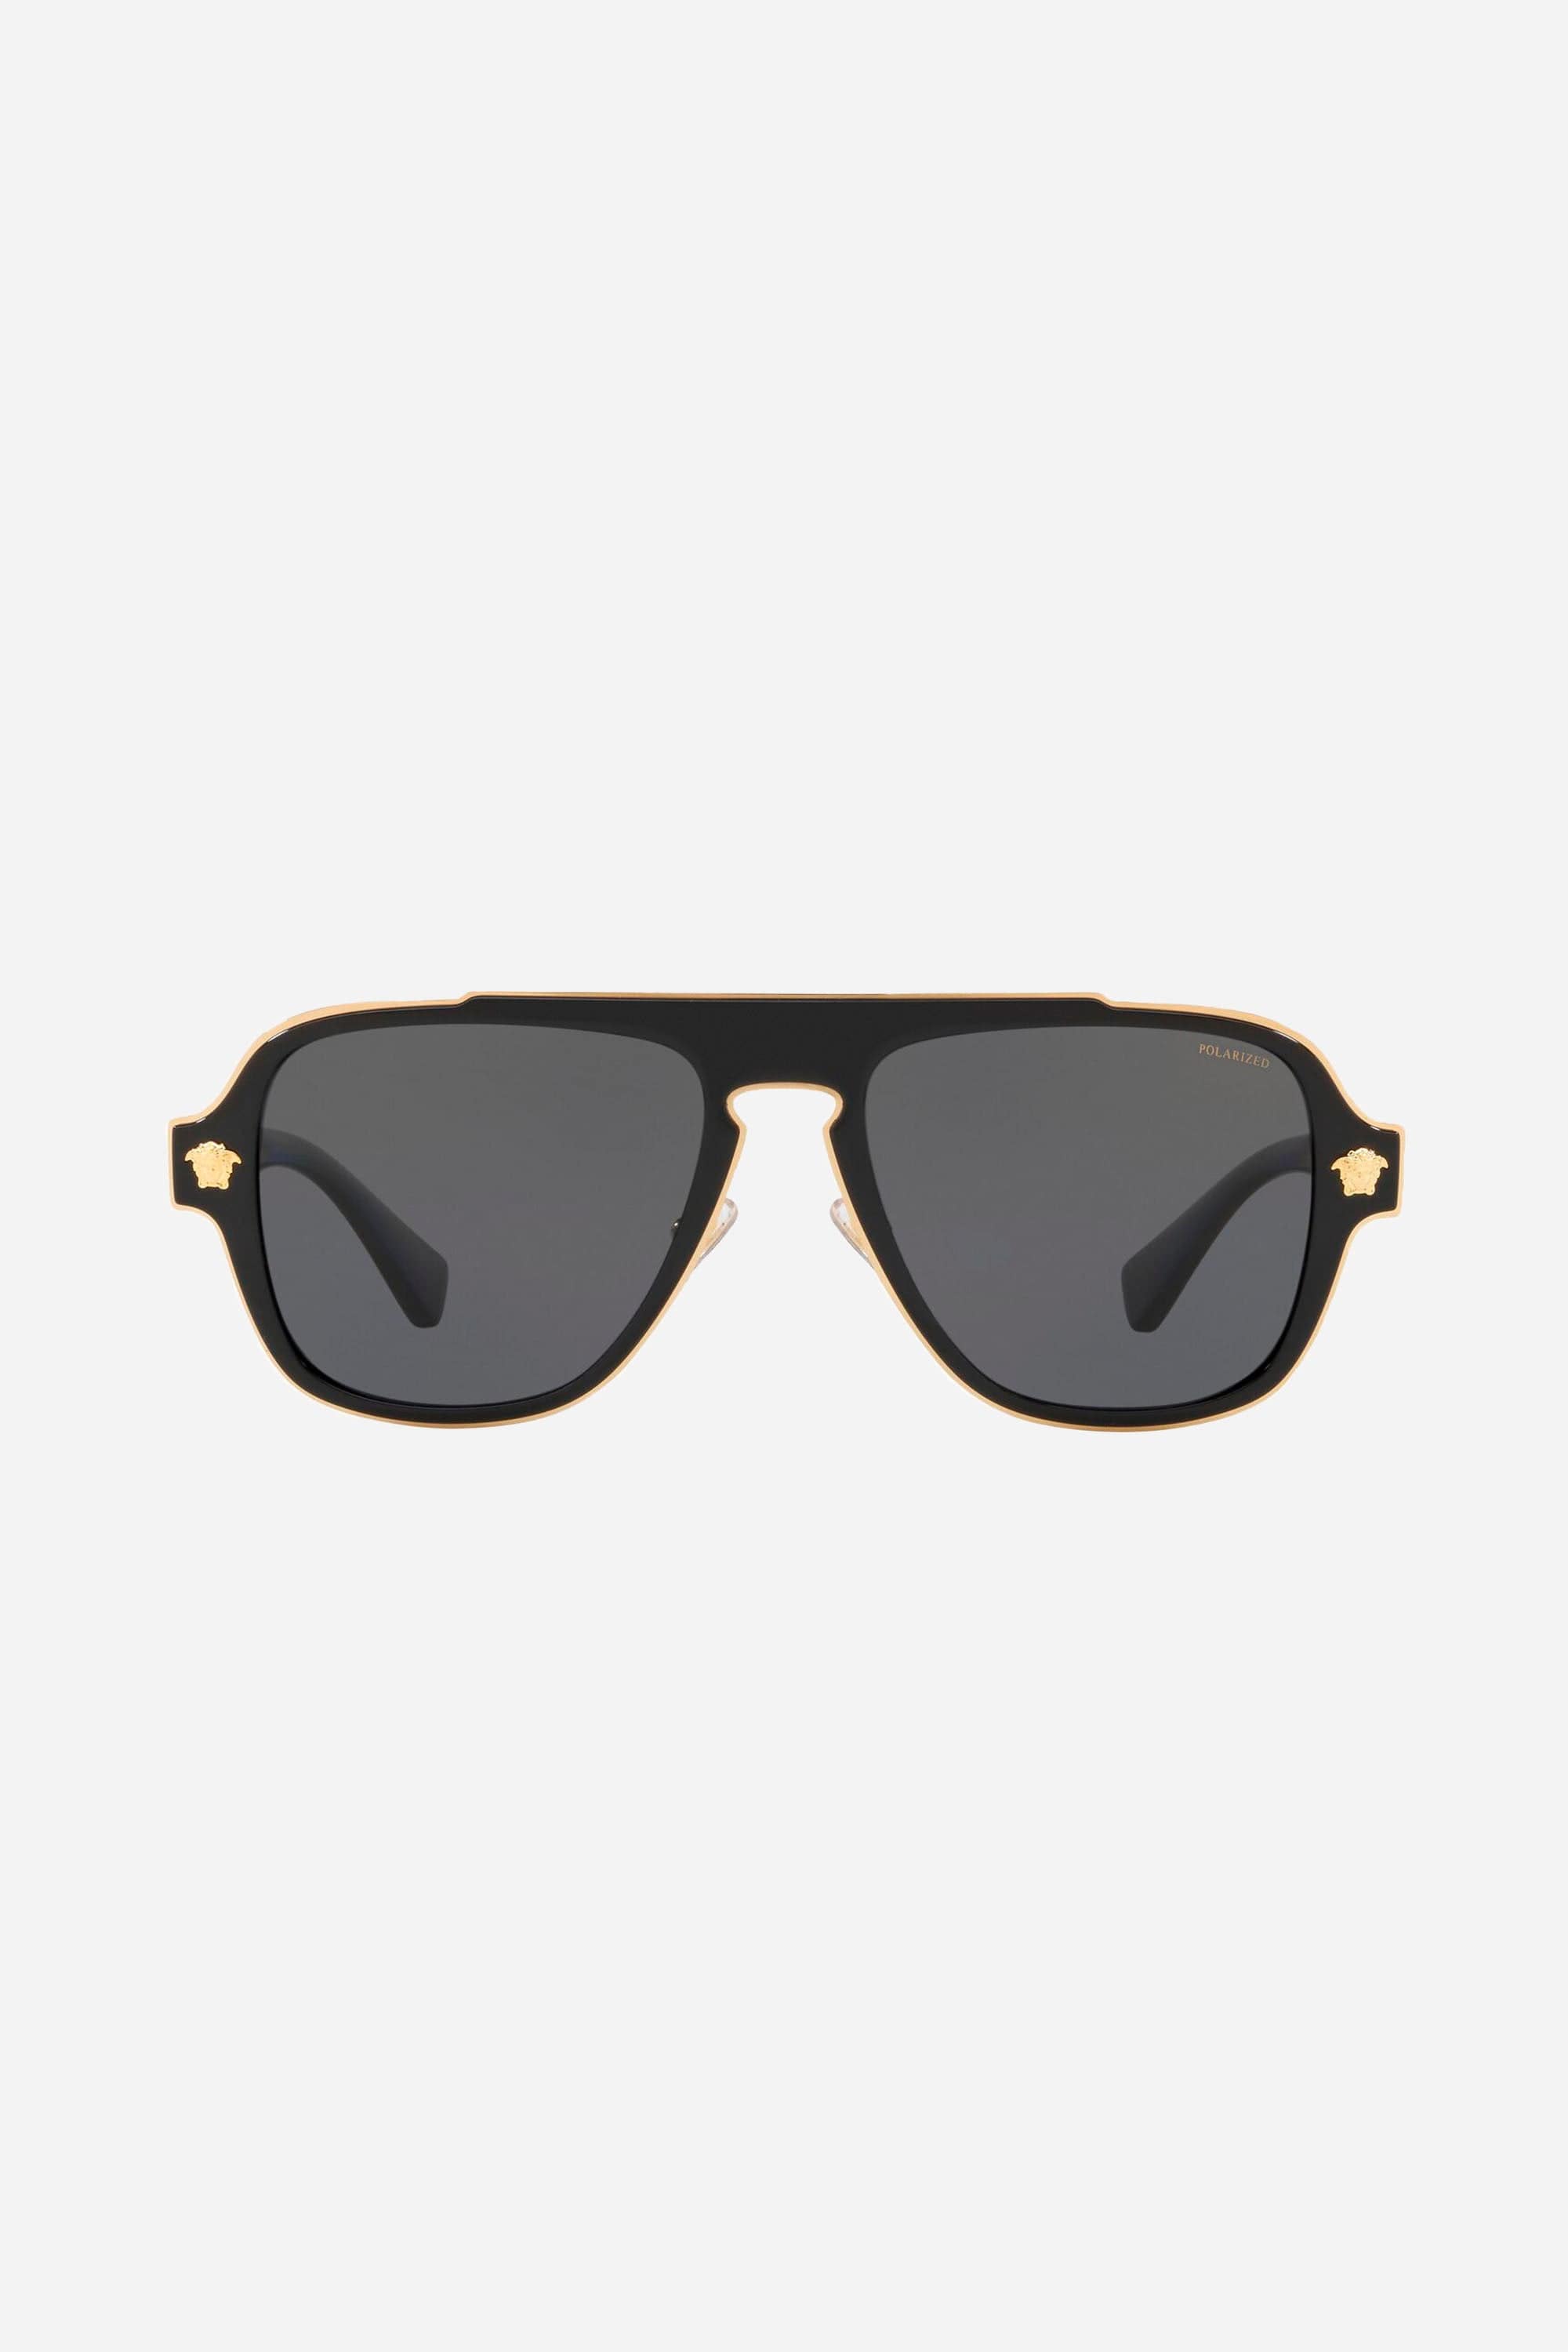 Versace caravan sunglasses with gold details - Eyewear Club